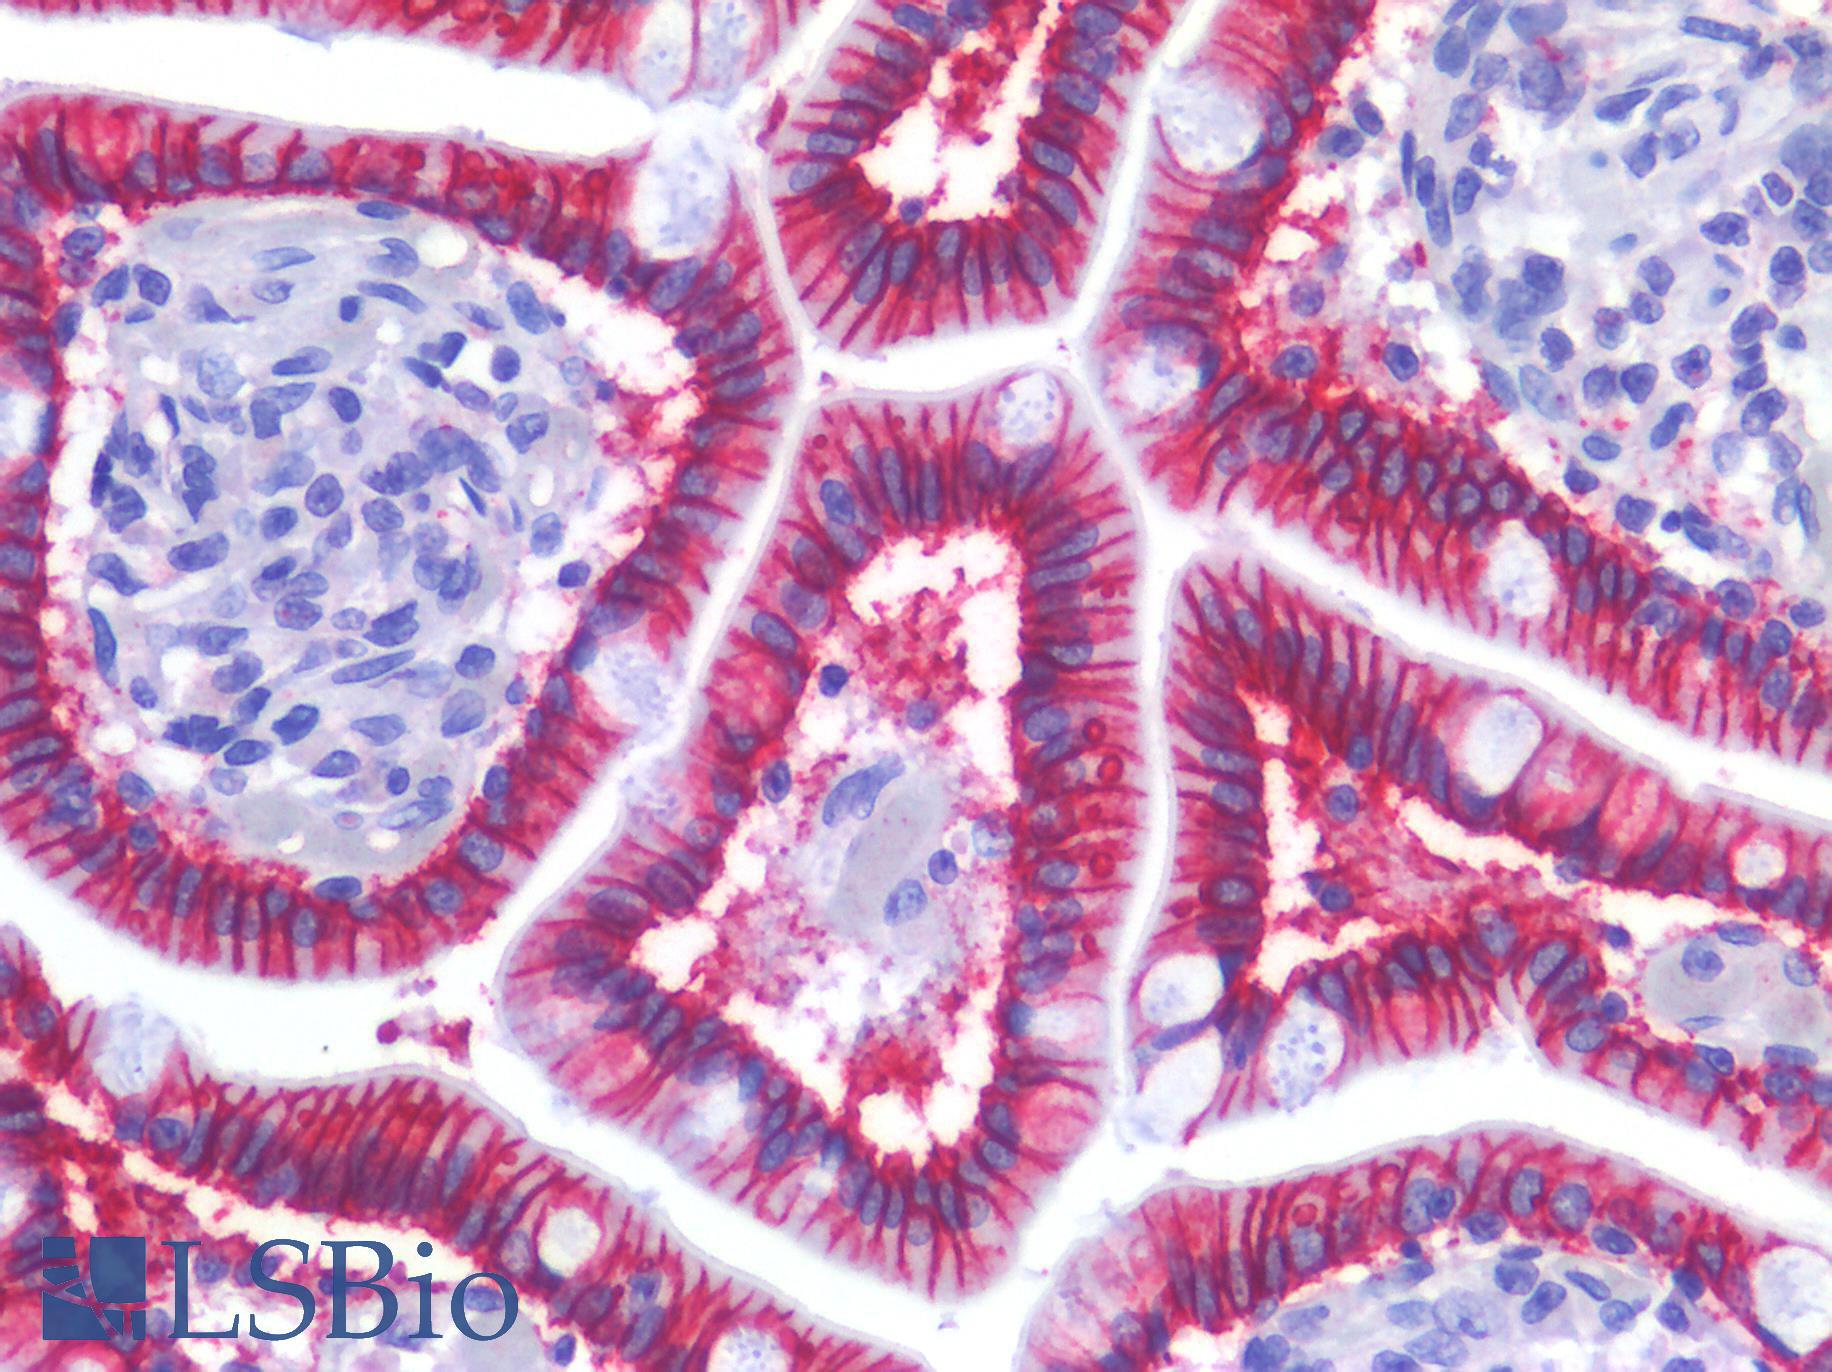 CDH17 / Cadherin 17 Antibody - Human Small Intestine: Formalin-Fixed, Paraffin-Embedded (FFPE)